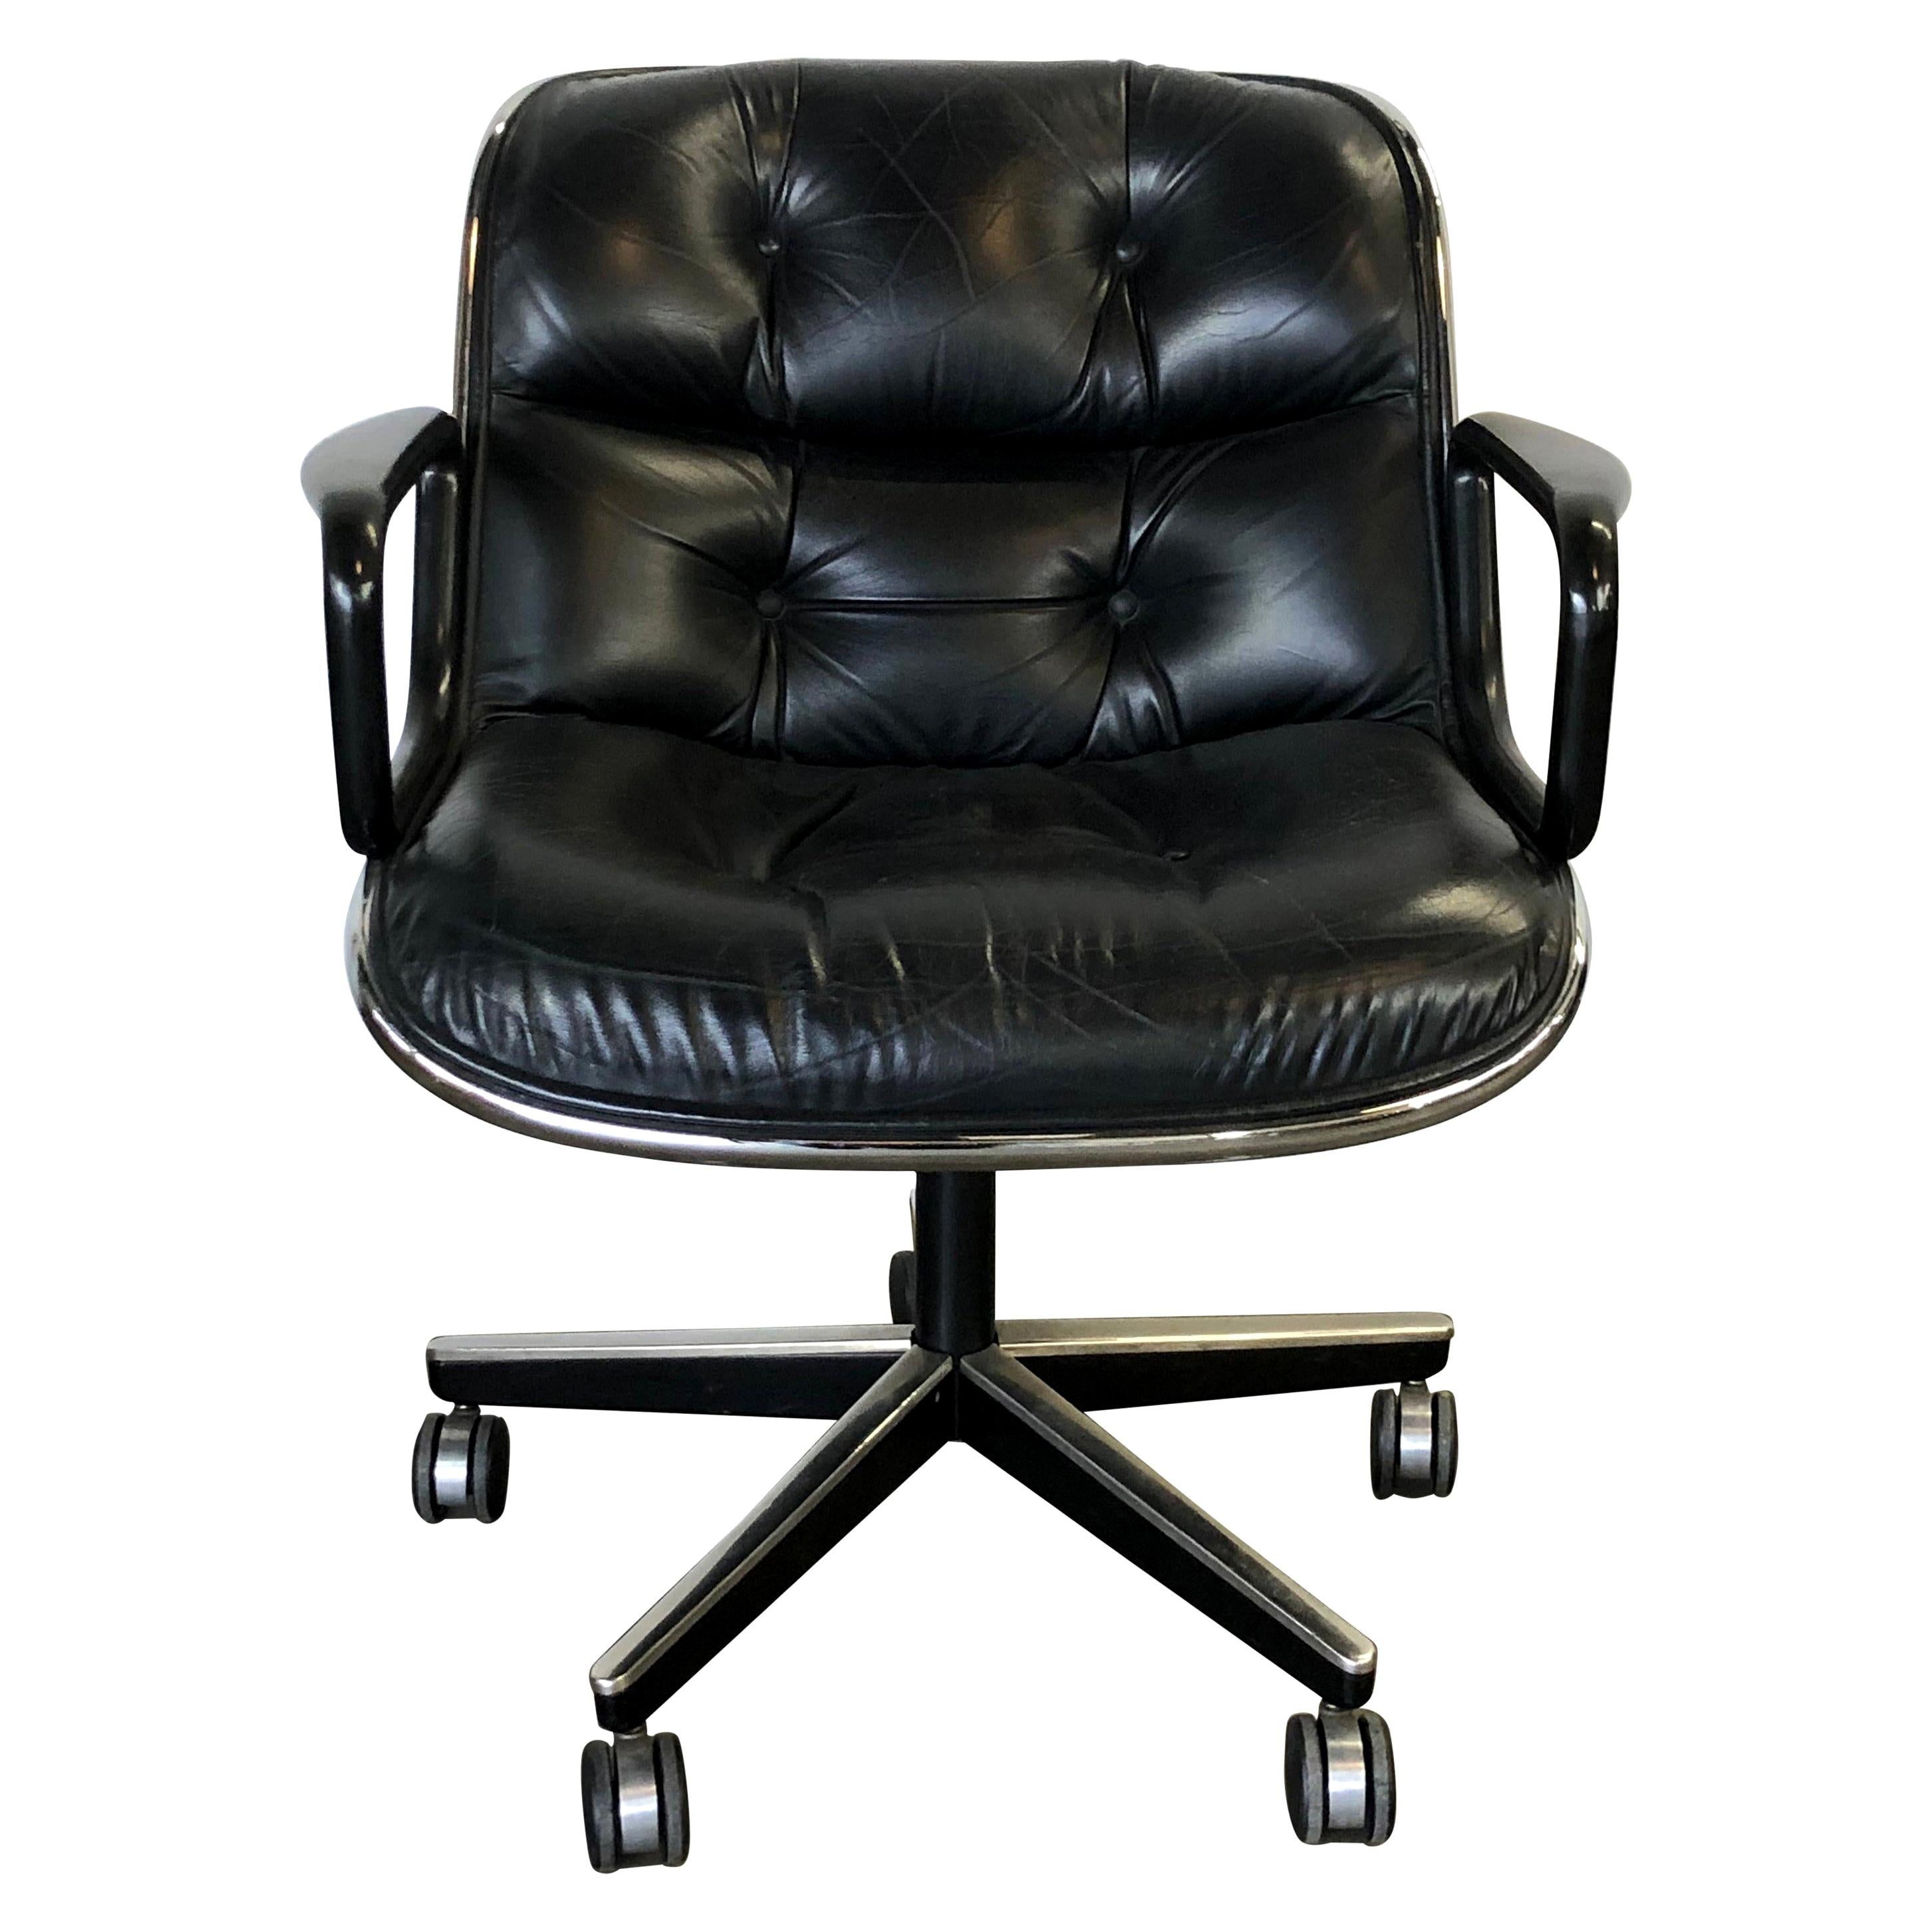 Charles Pollock Leather Tilt Swivel Office Desk Chair by Knoll